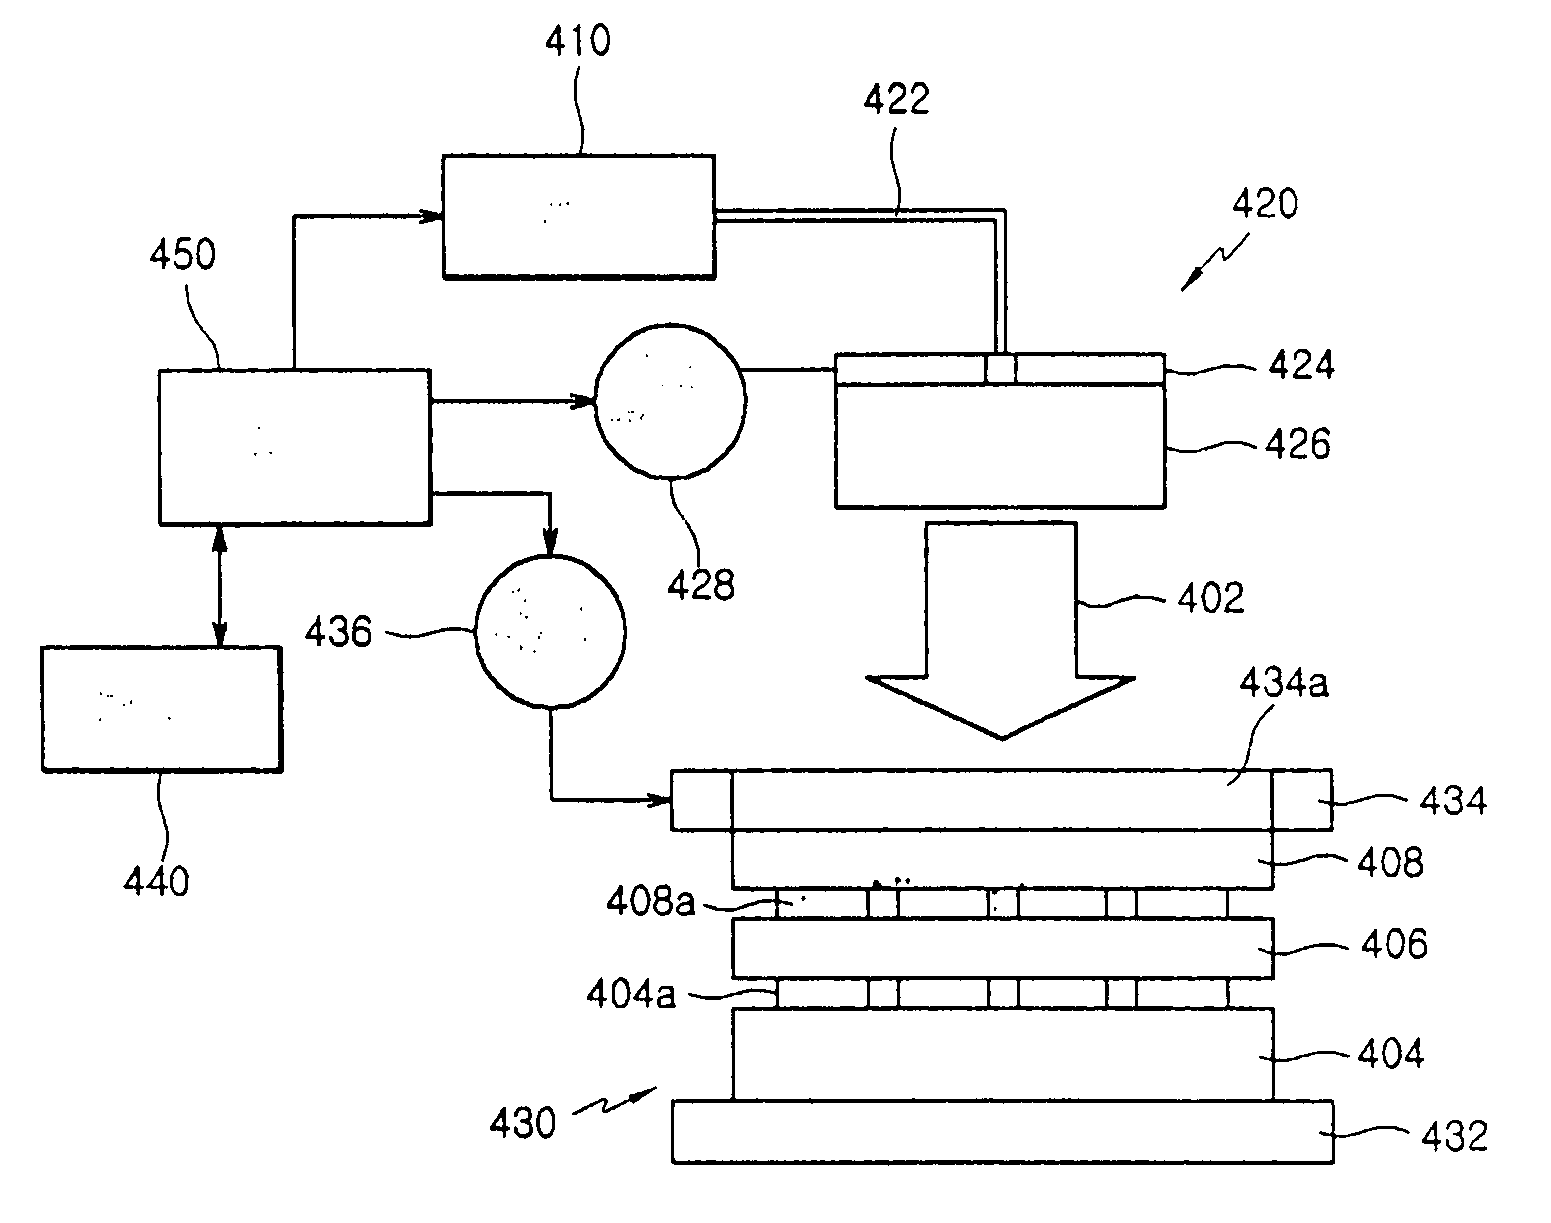 Apparatus and method for bonding anisotropic conductive film using laser beam